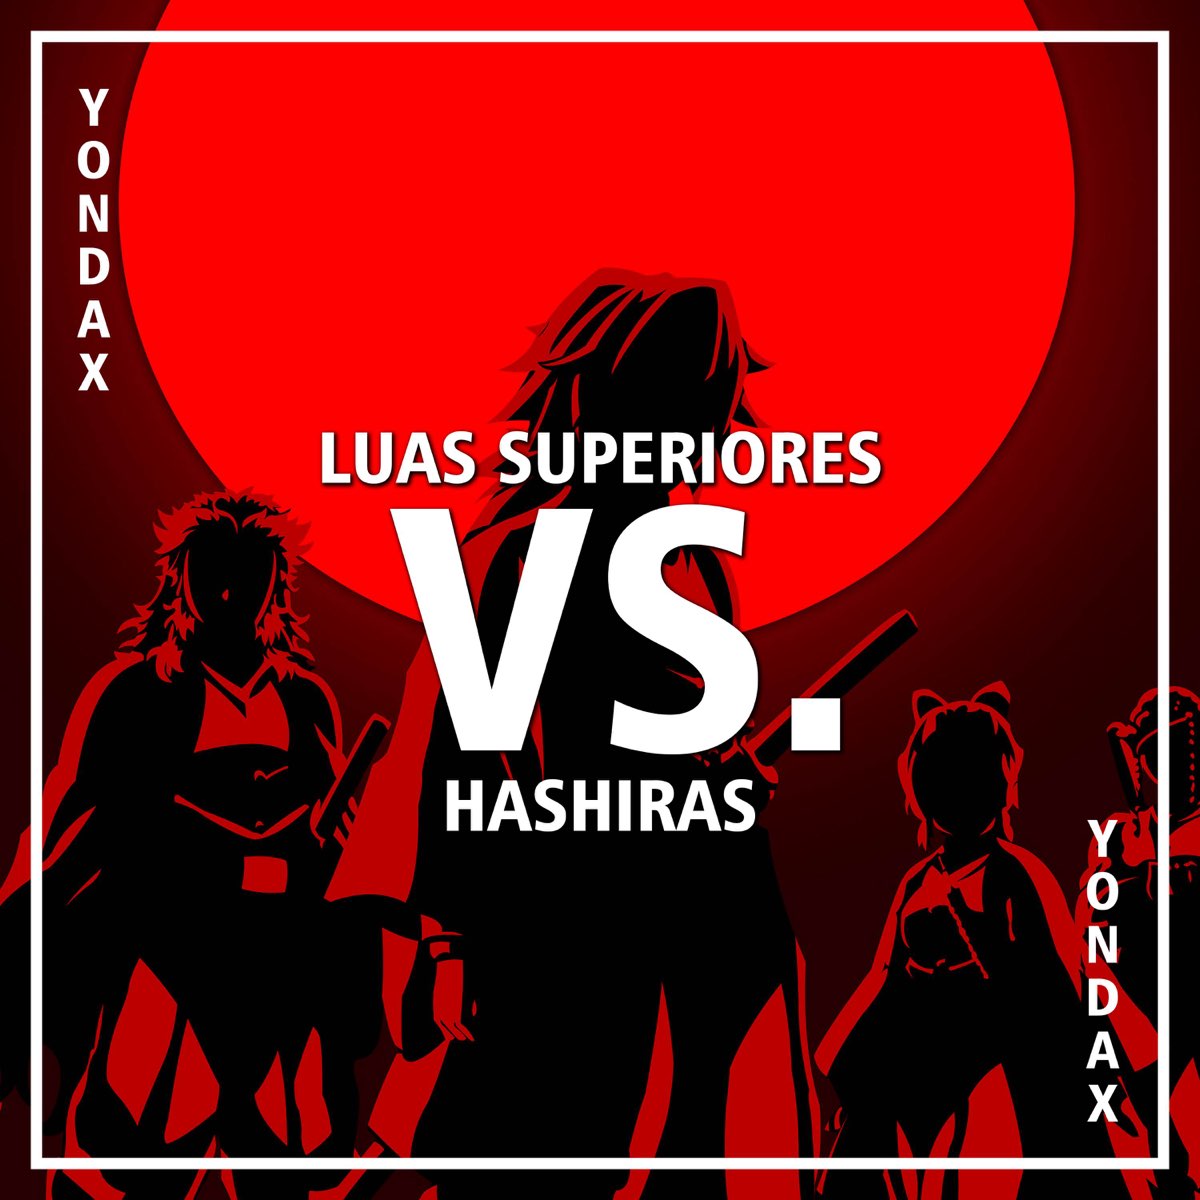 Rap dos Hashiras (feat. Micael Rapper, Basara & Daarui) - Sting Raps,  Yondax & Enygma Rapper